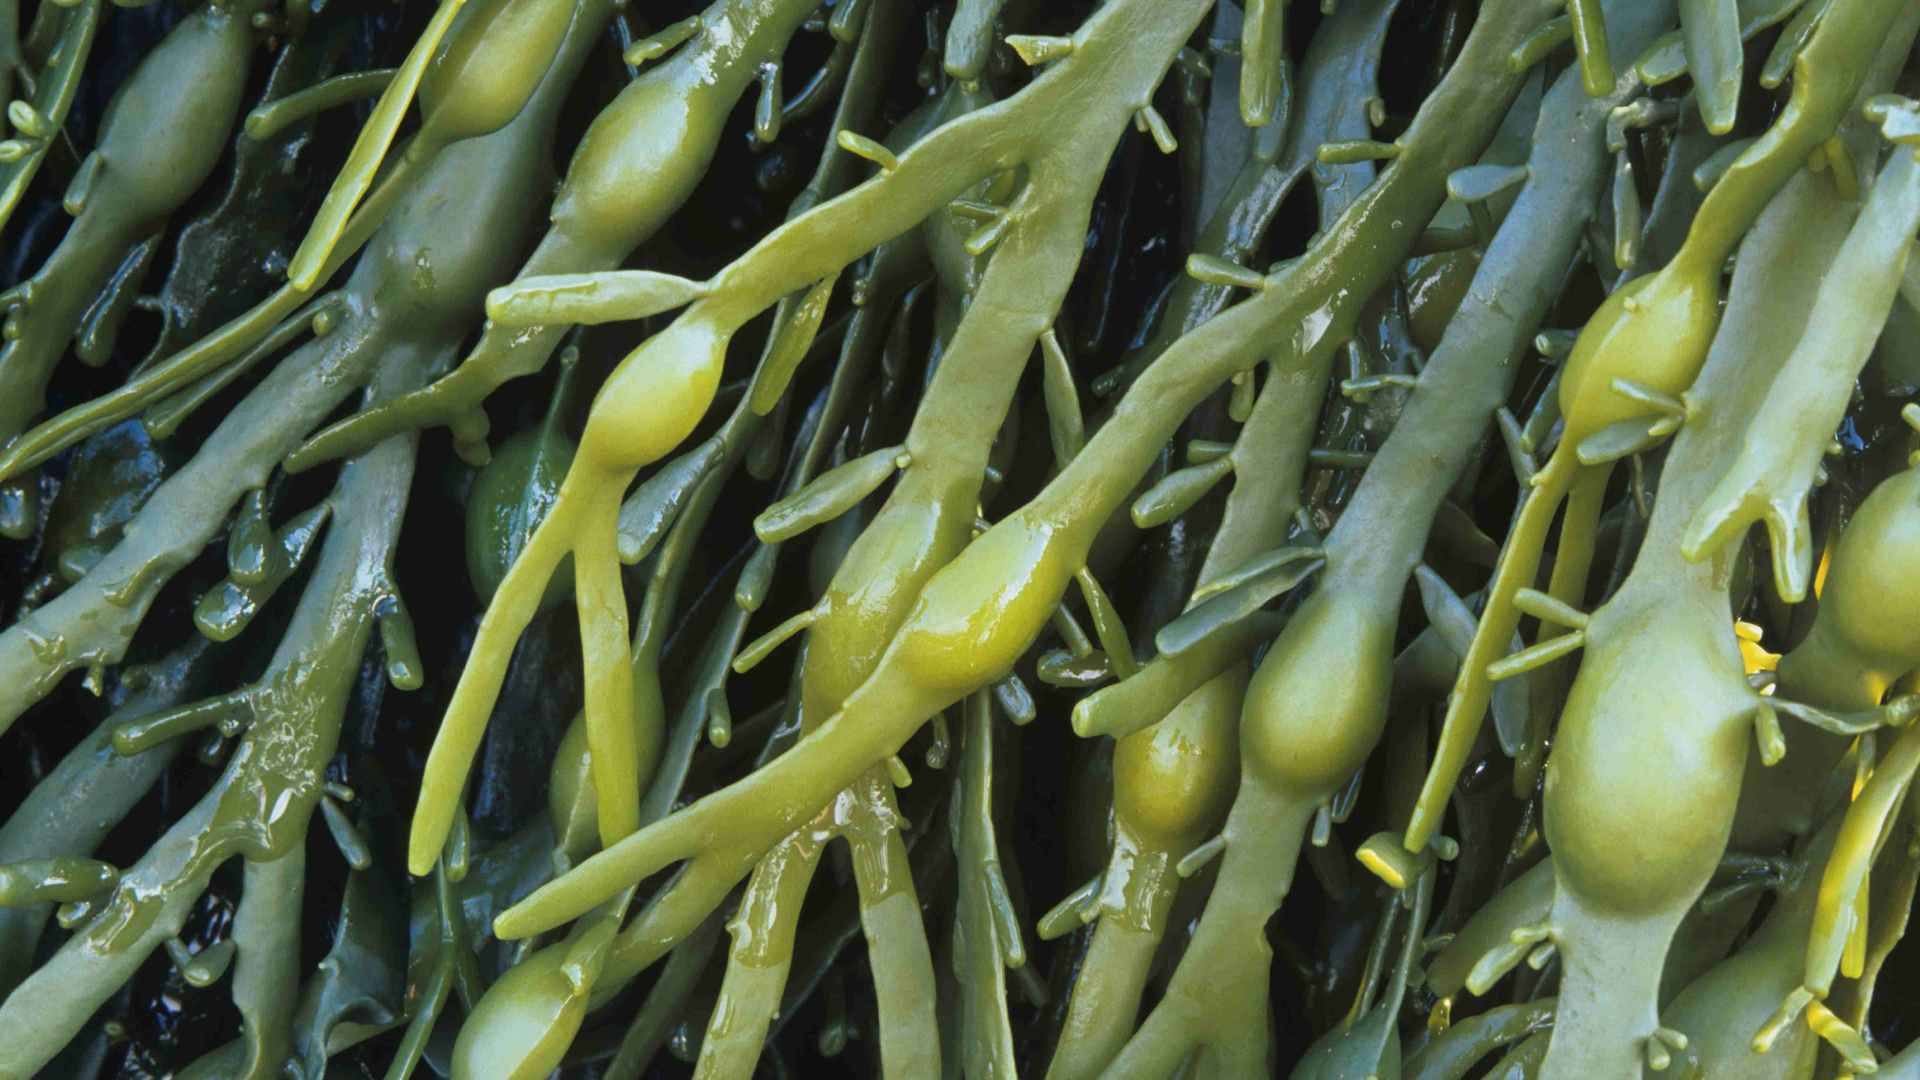 Empresa canadense Acadian Plant Health apresenta a alga "Ascophyllum nodosum" ao mercado brasileiro